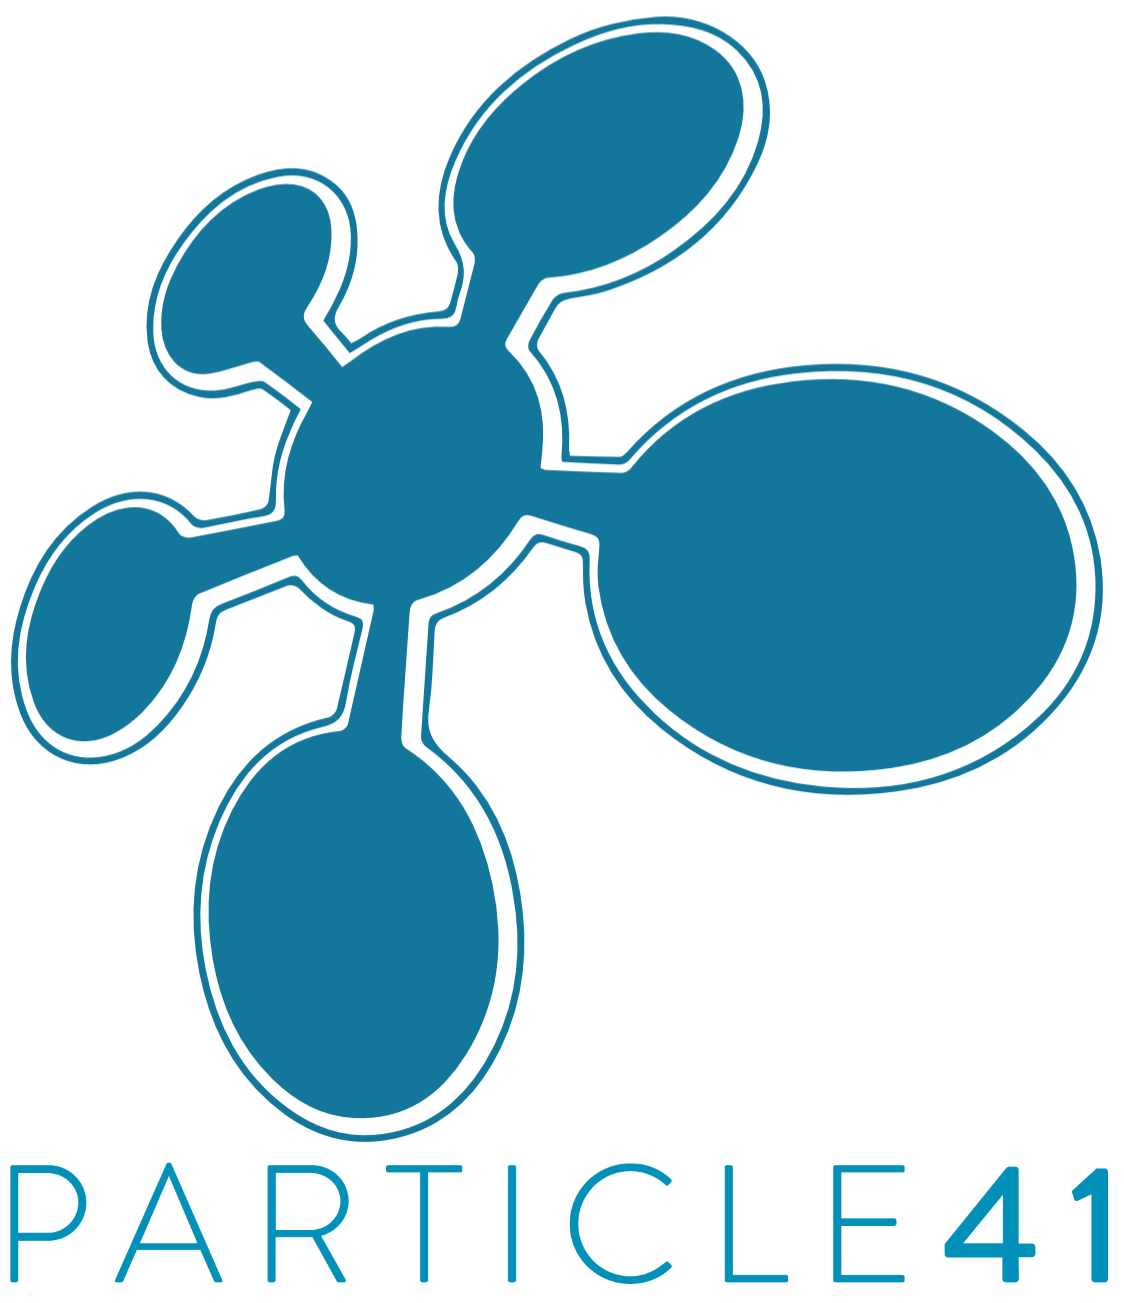 Particle 41